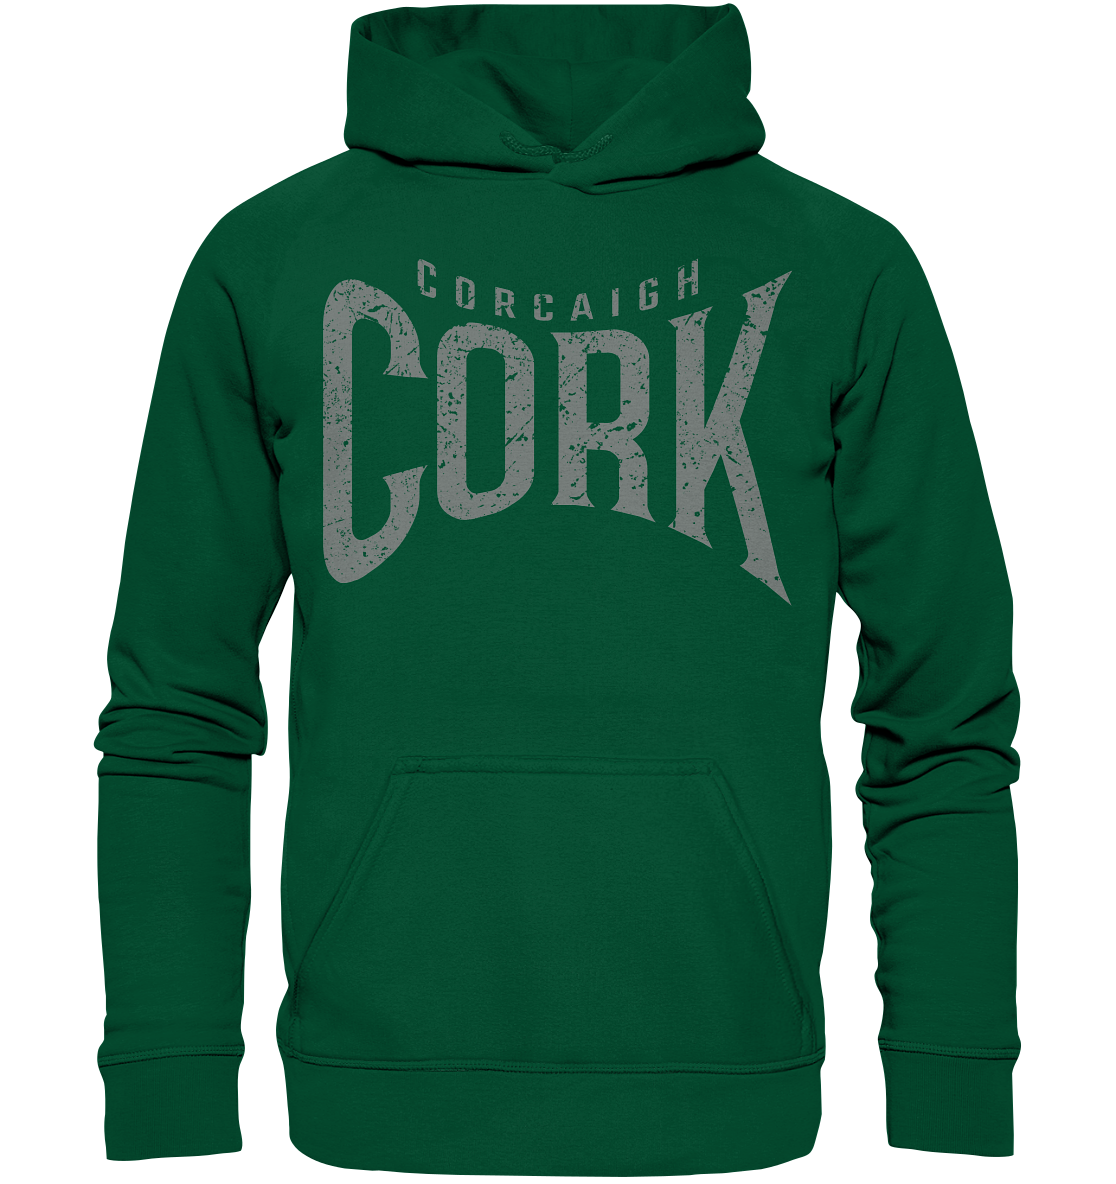 Cities Of Ireland "Cork" - Basic Unisex Hoodie